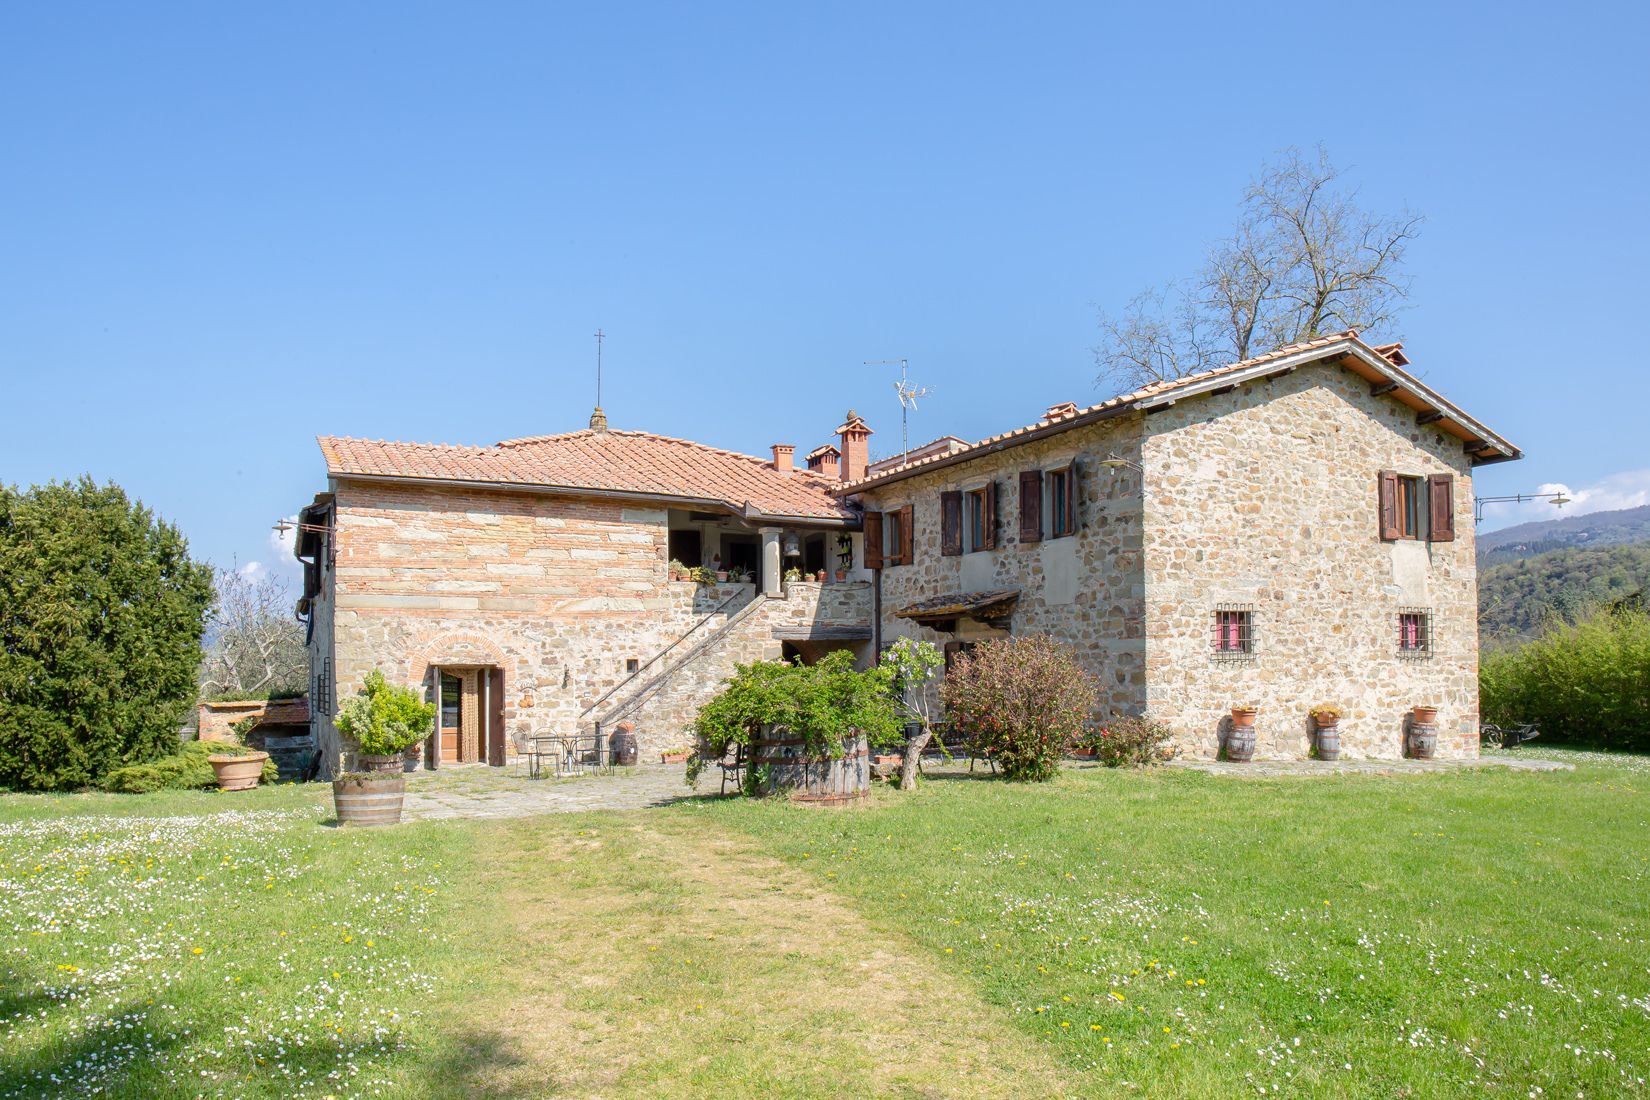 For sale cottage in quiet zone Pelago Toscana